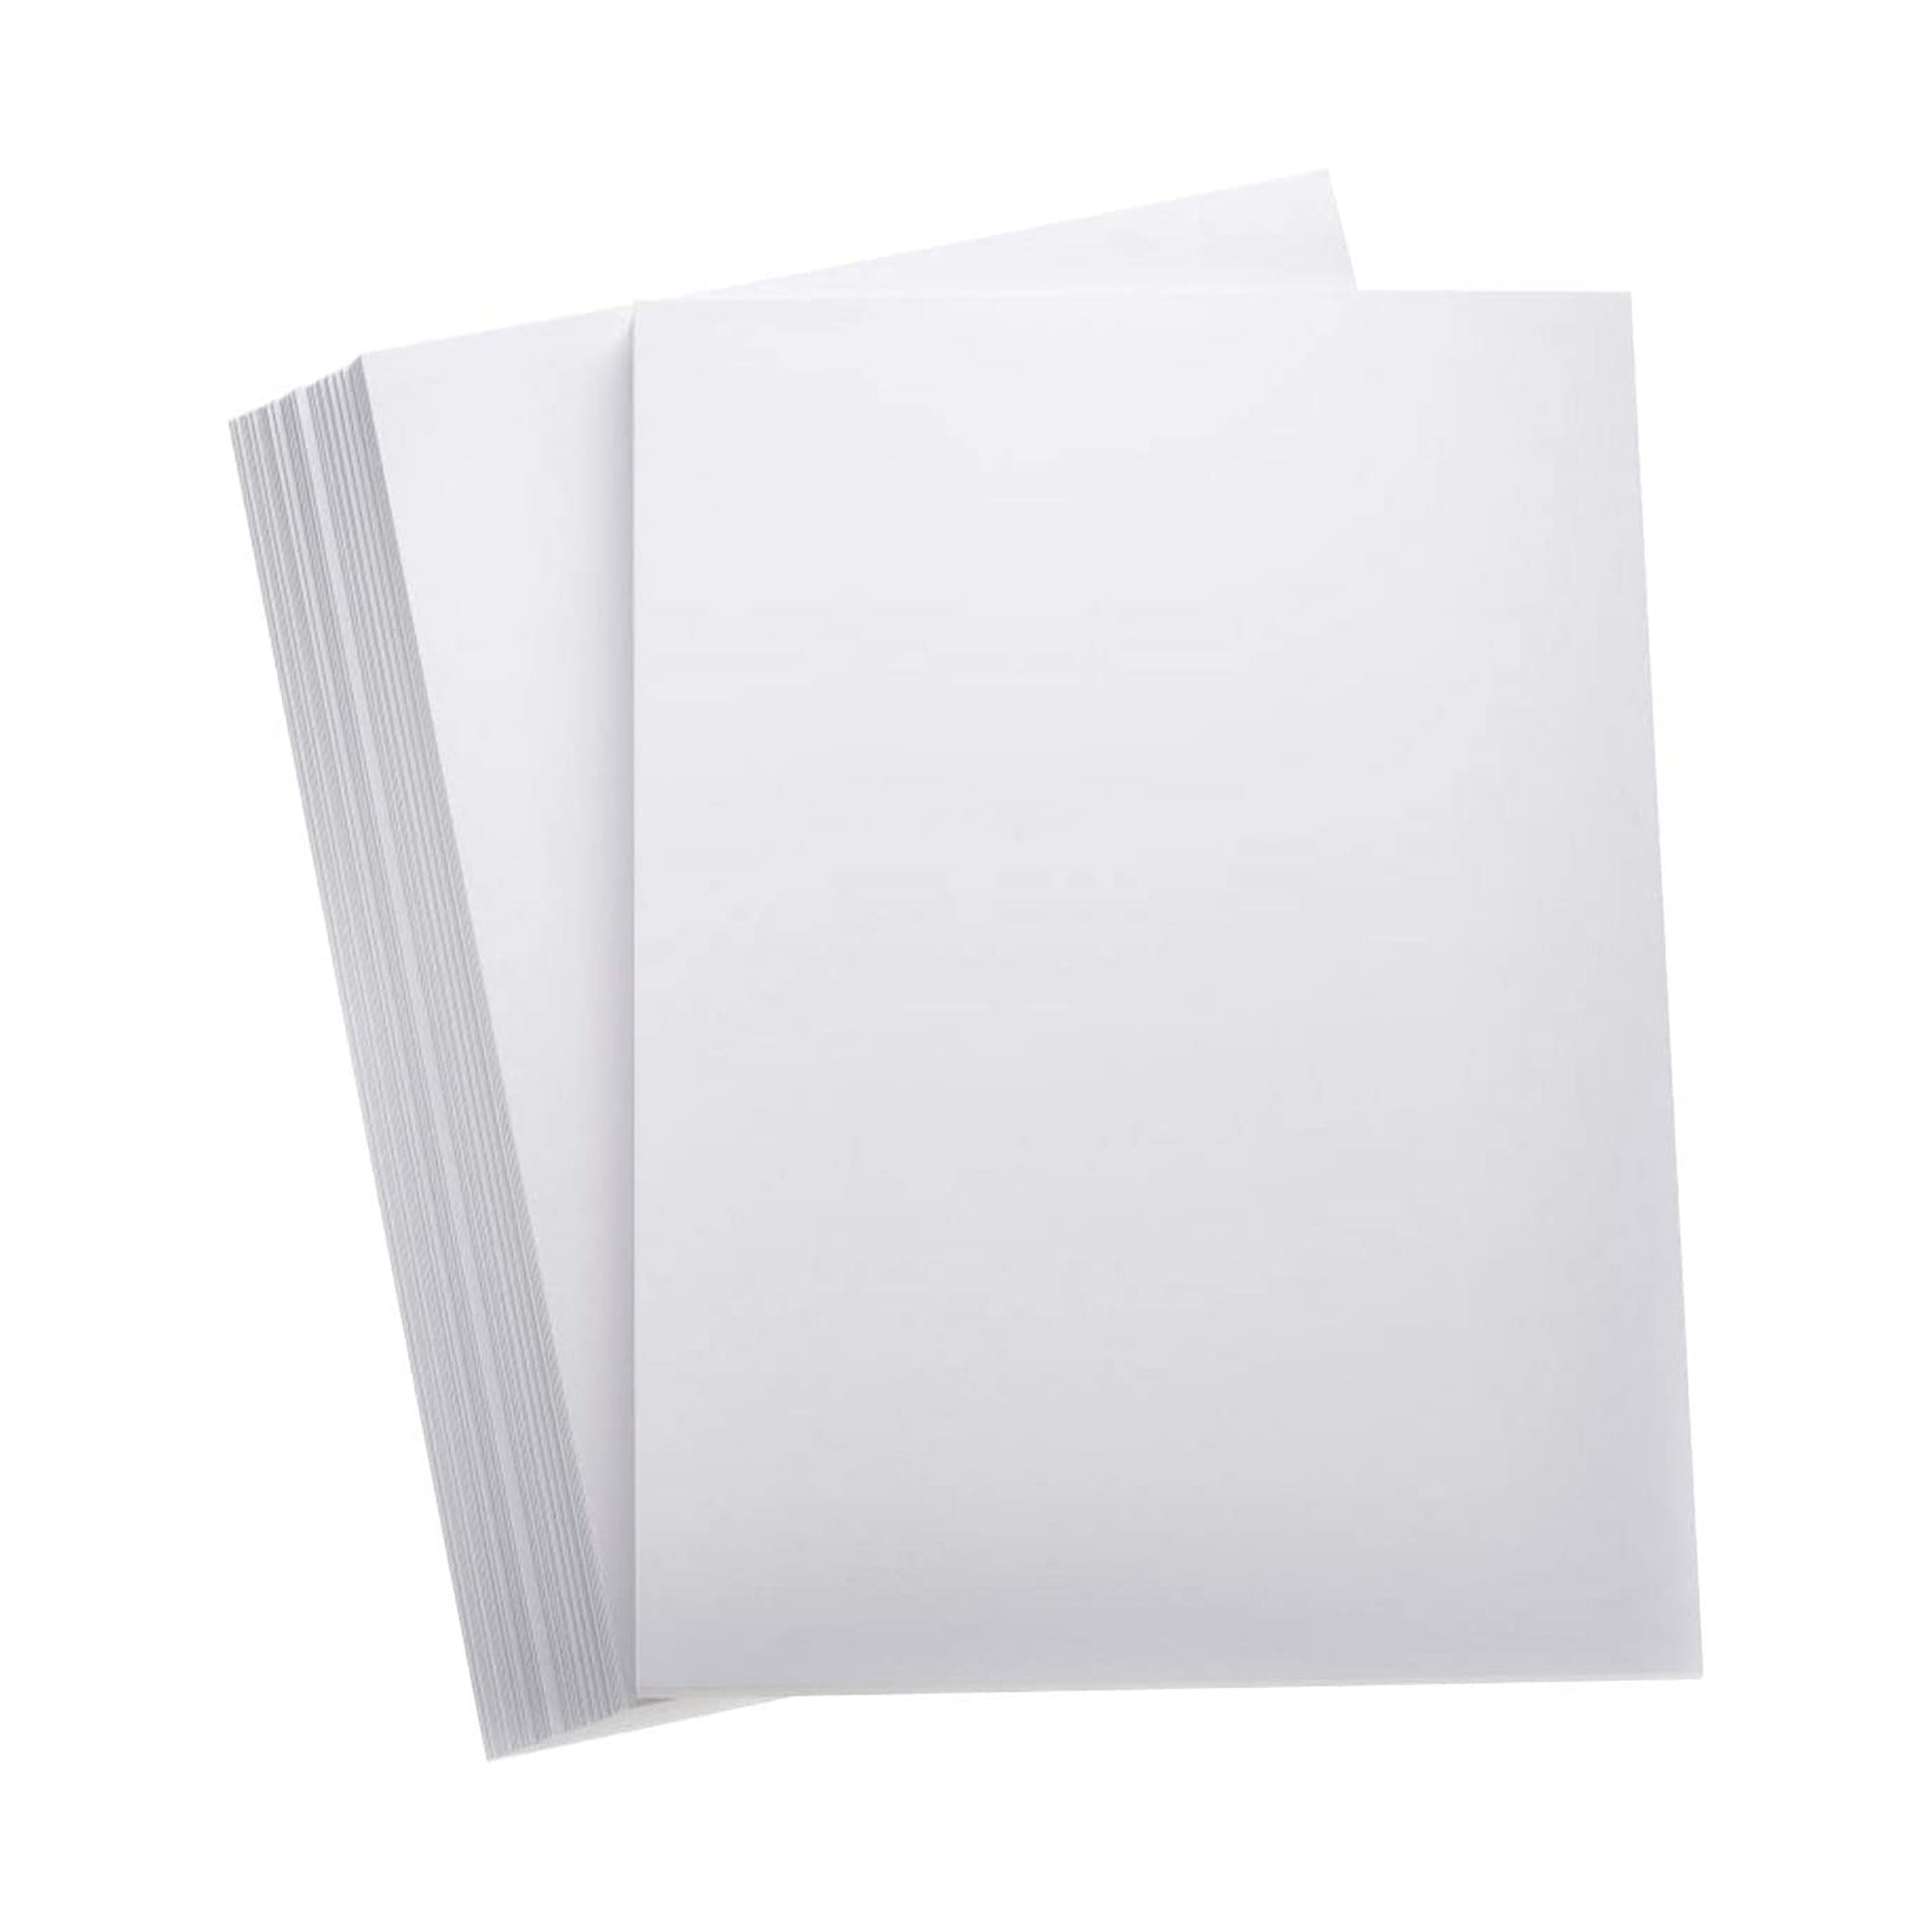 Seawhite White Card - 300gsm - 50 Sheet Pack